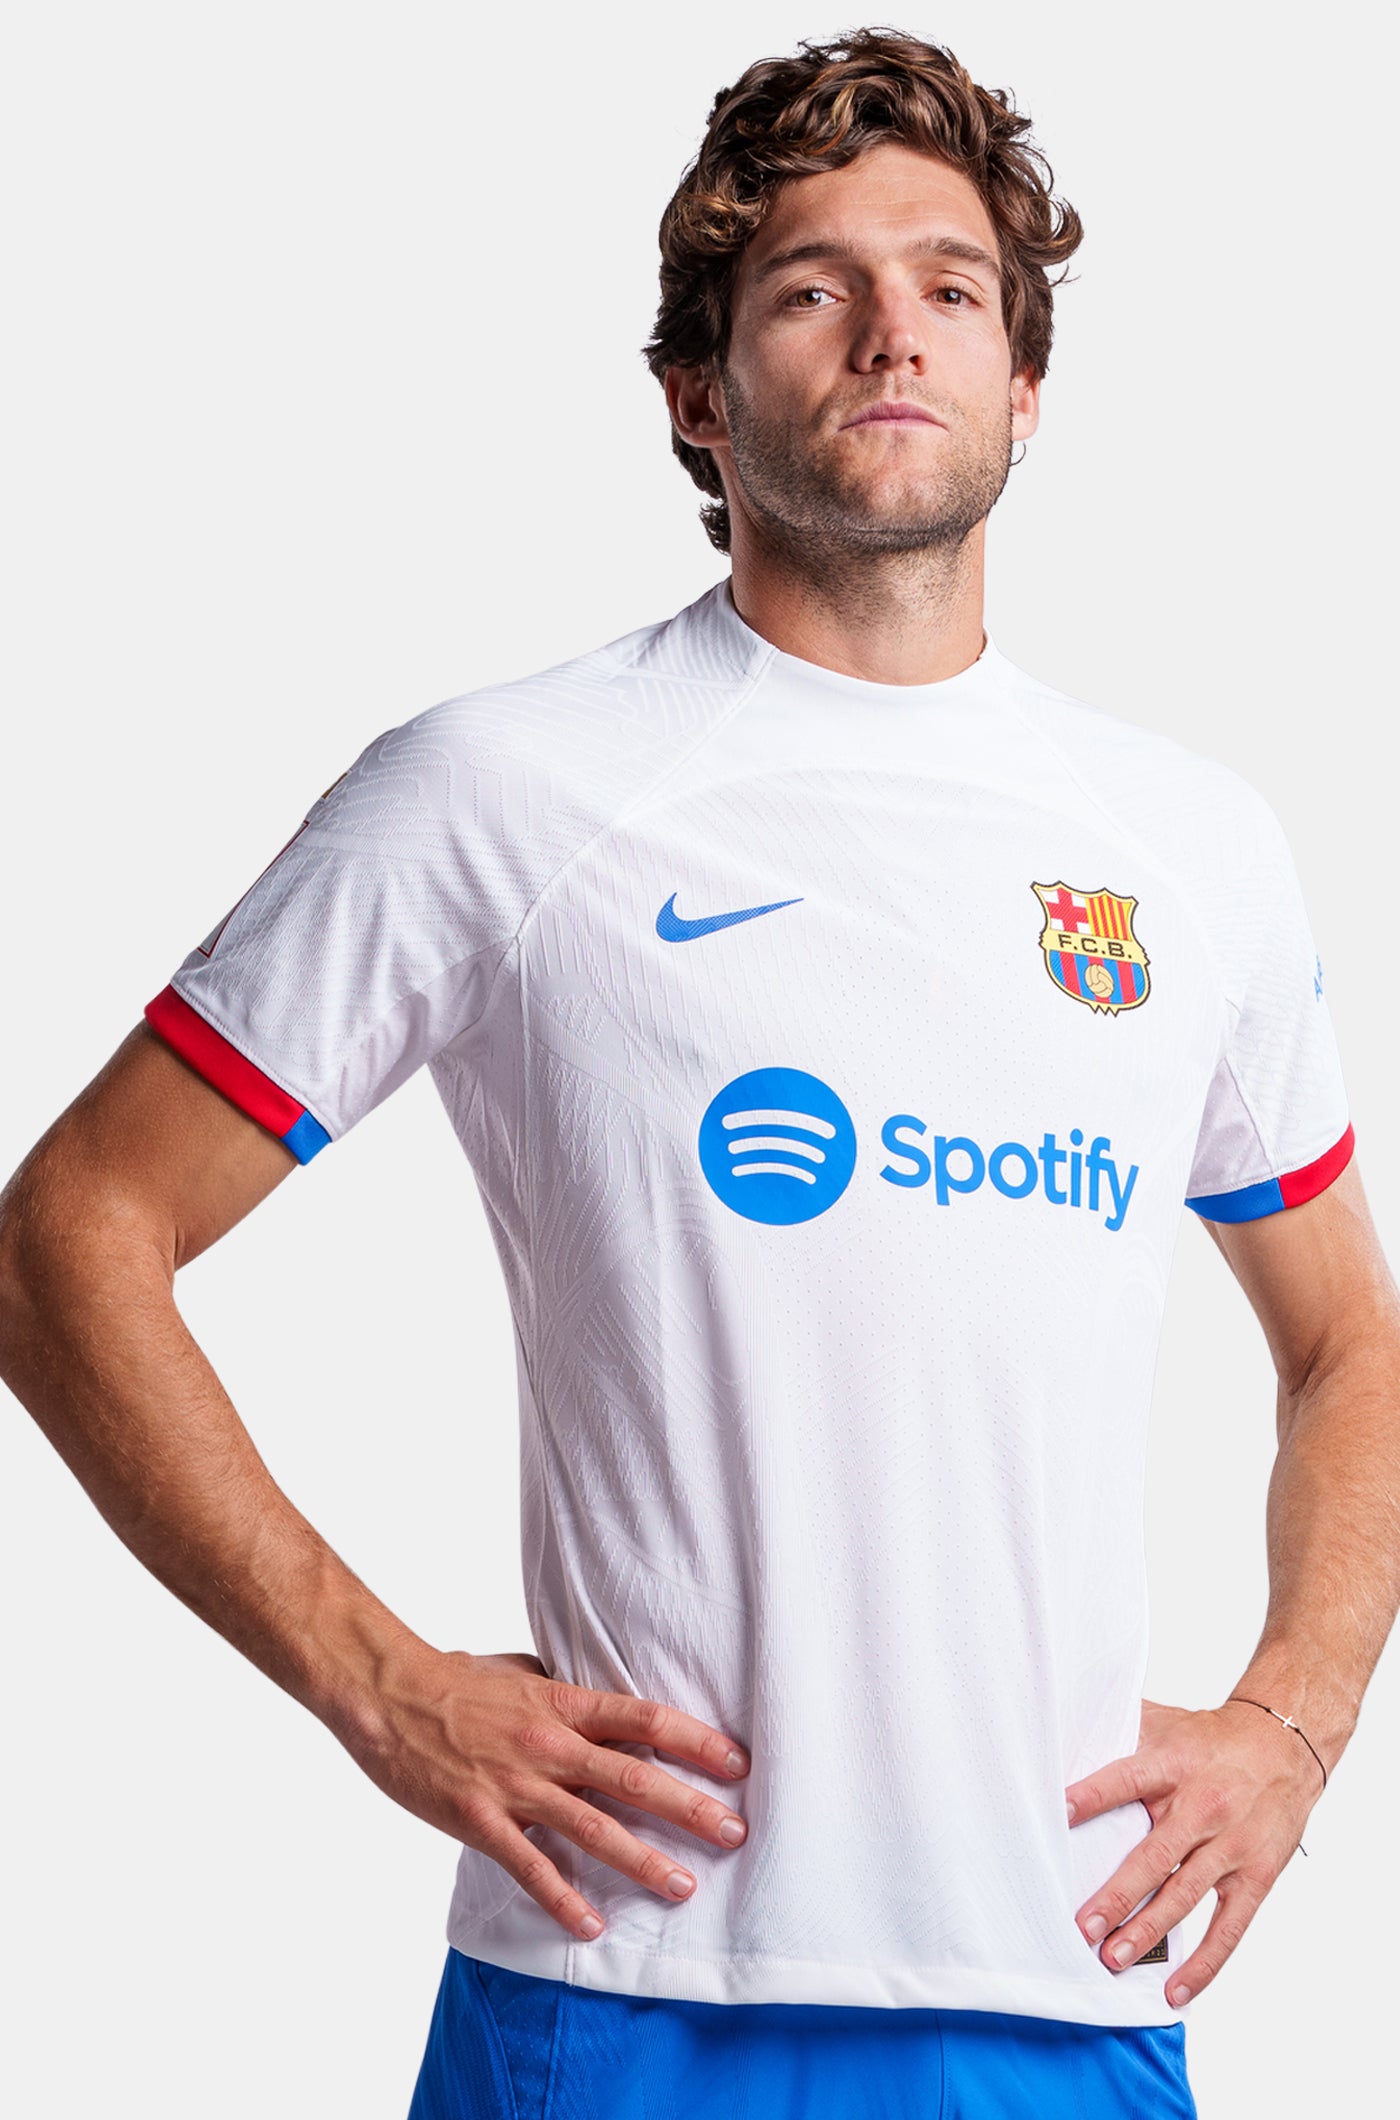 LFP FC Barcelona away shirt 23/24 Player’s Edition  - MARCOS A.